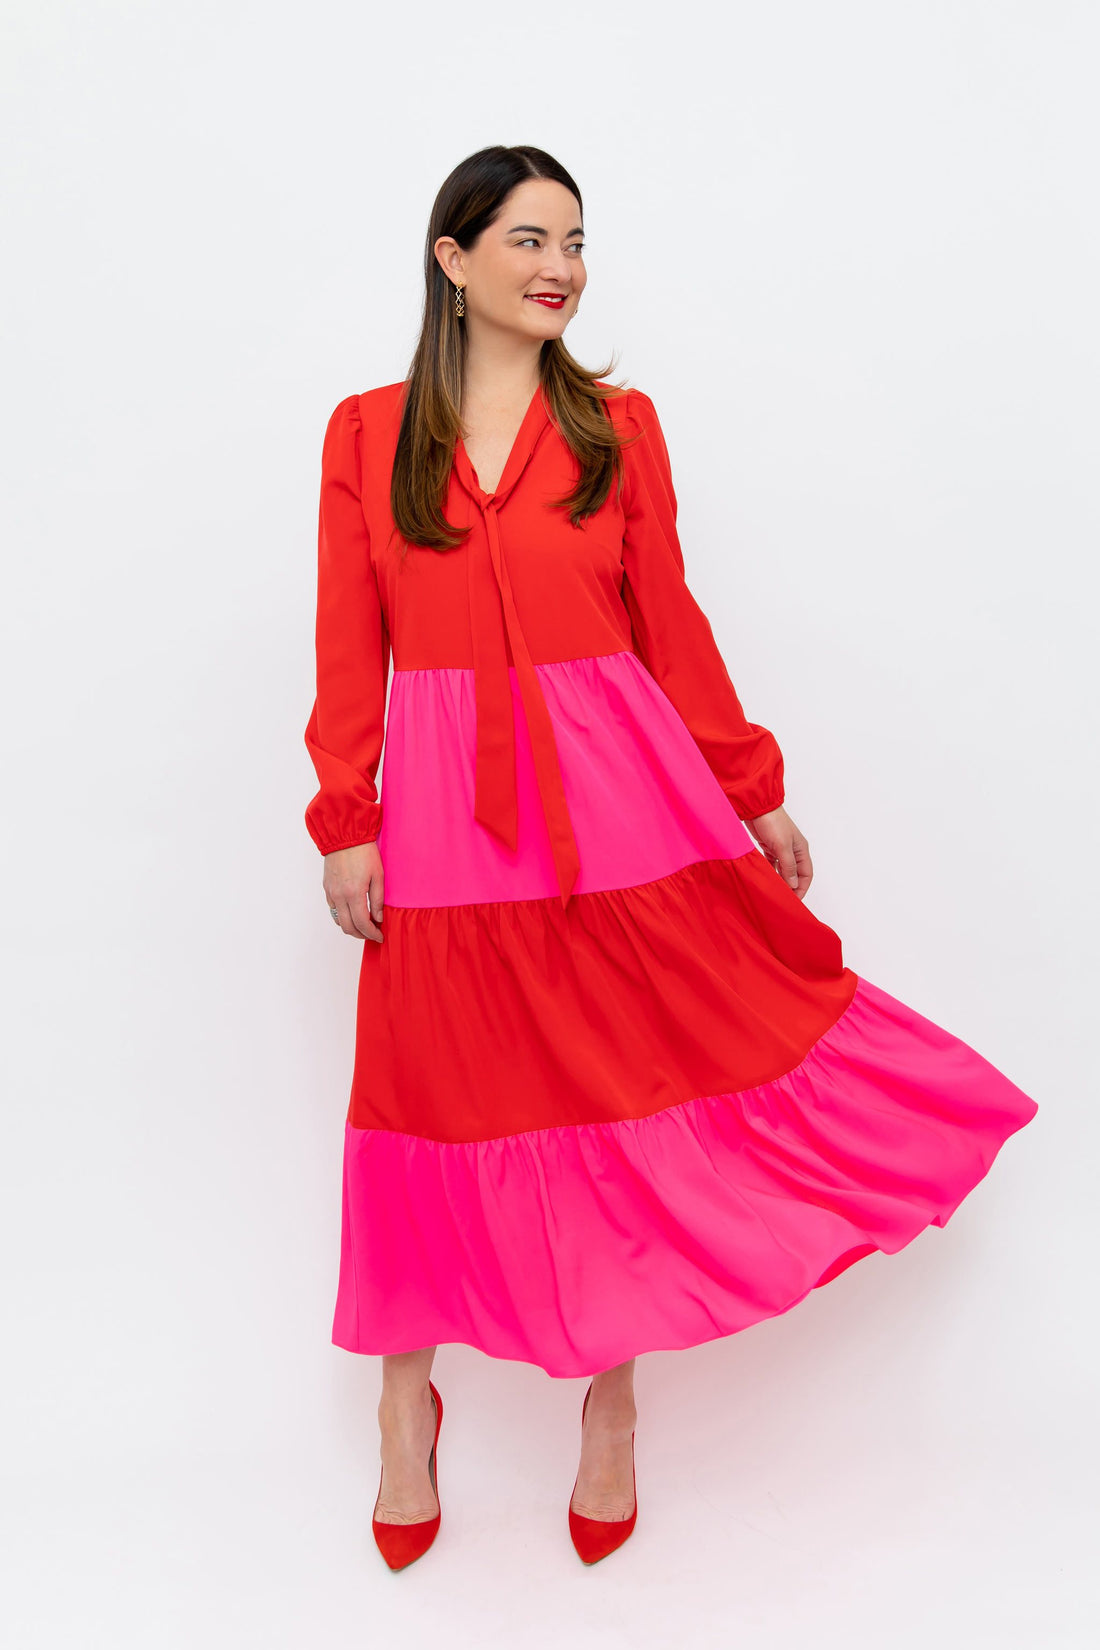 Anne Color-block dress – Sail to Sable